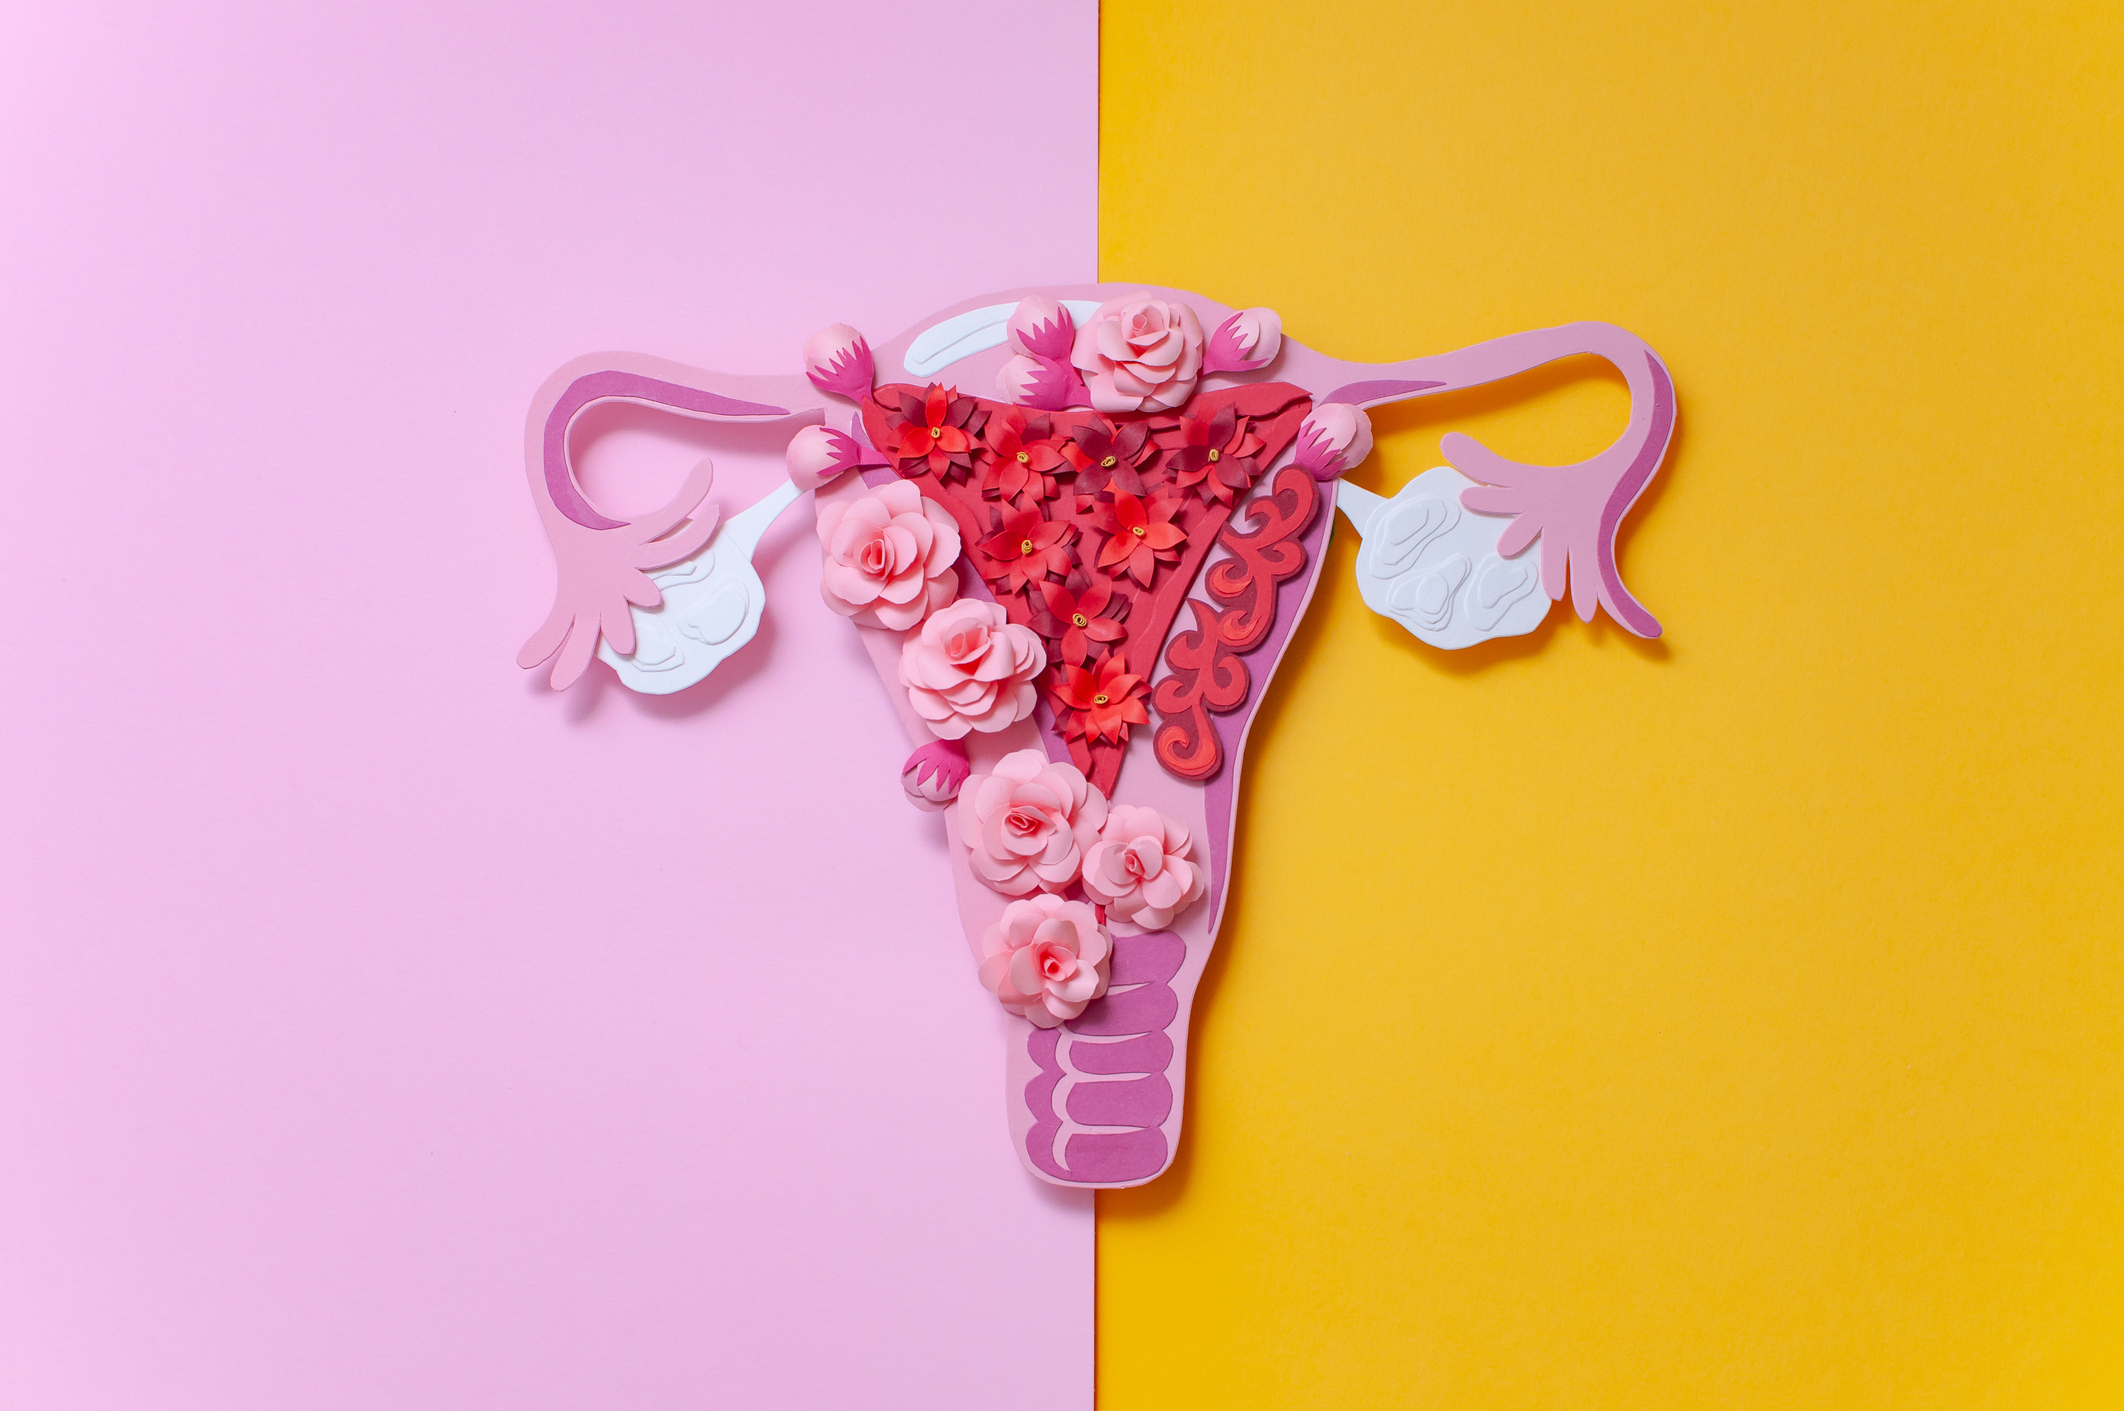 Study of Progesterone in the Treatment of Endometriosis Symptoms